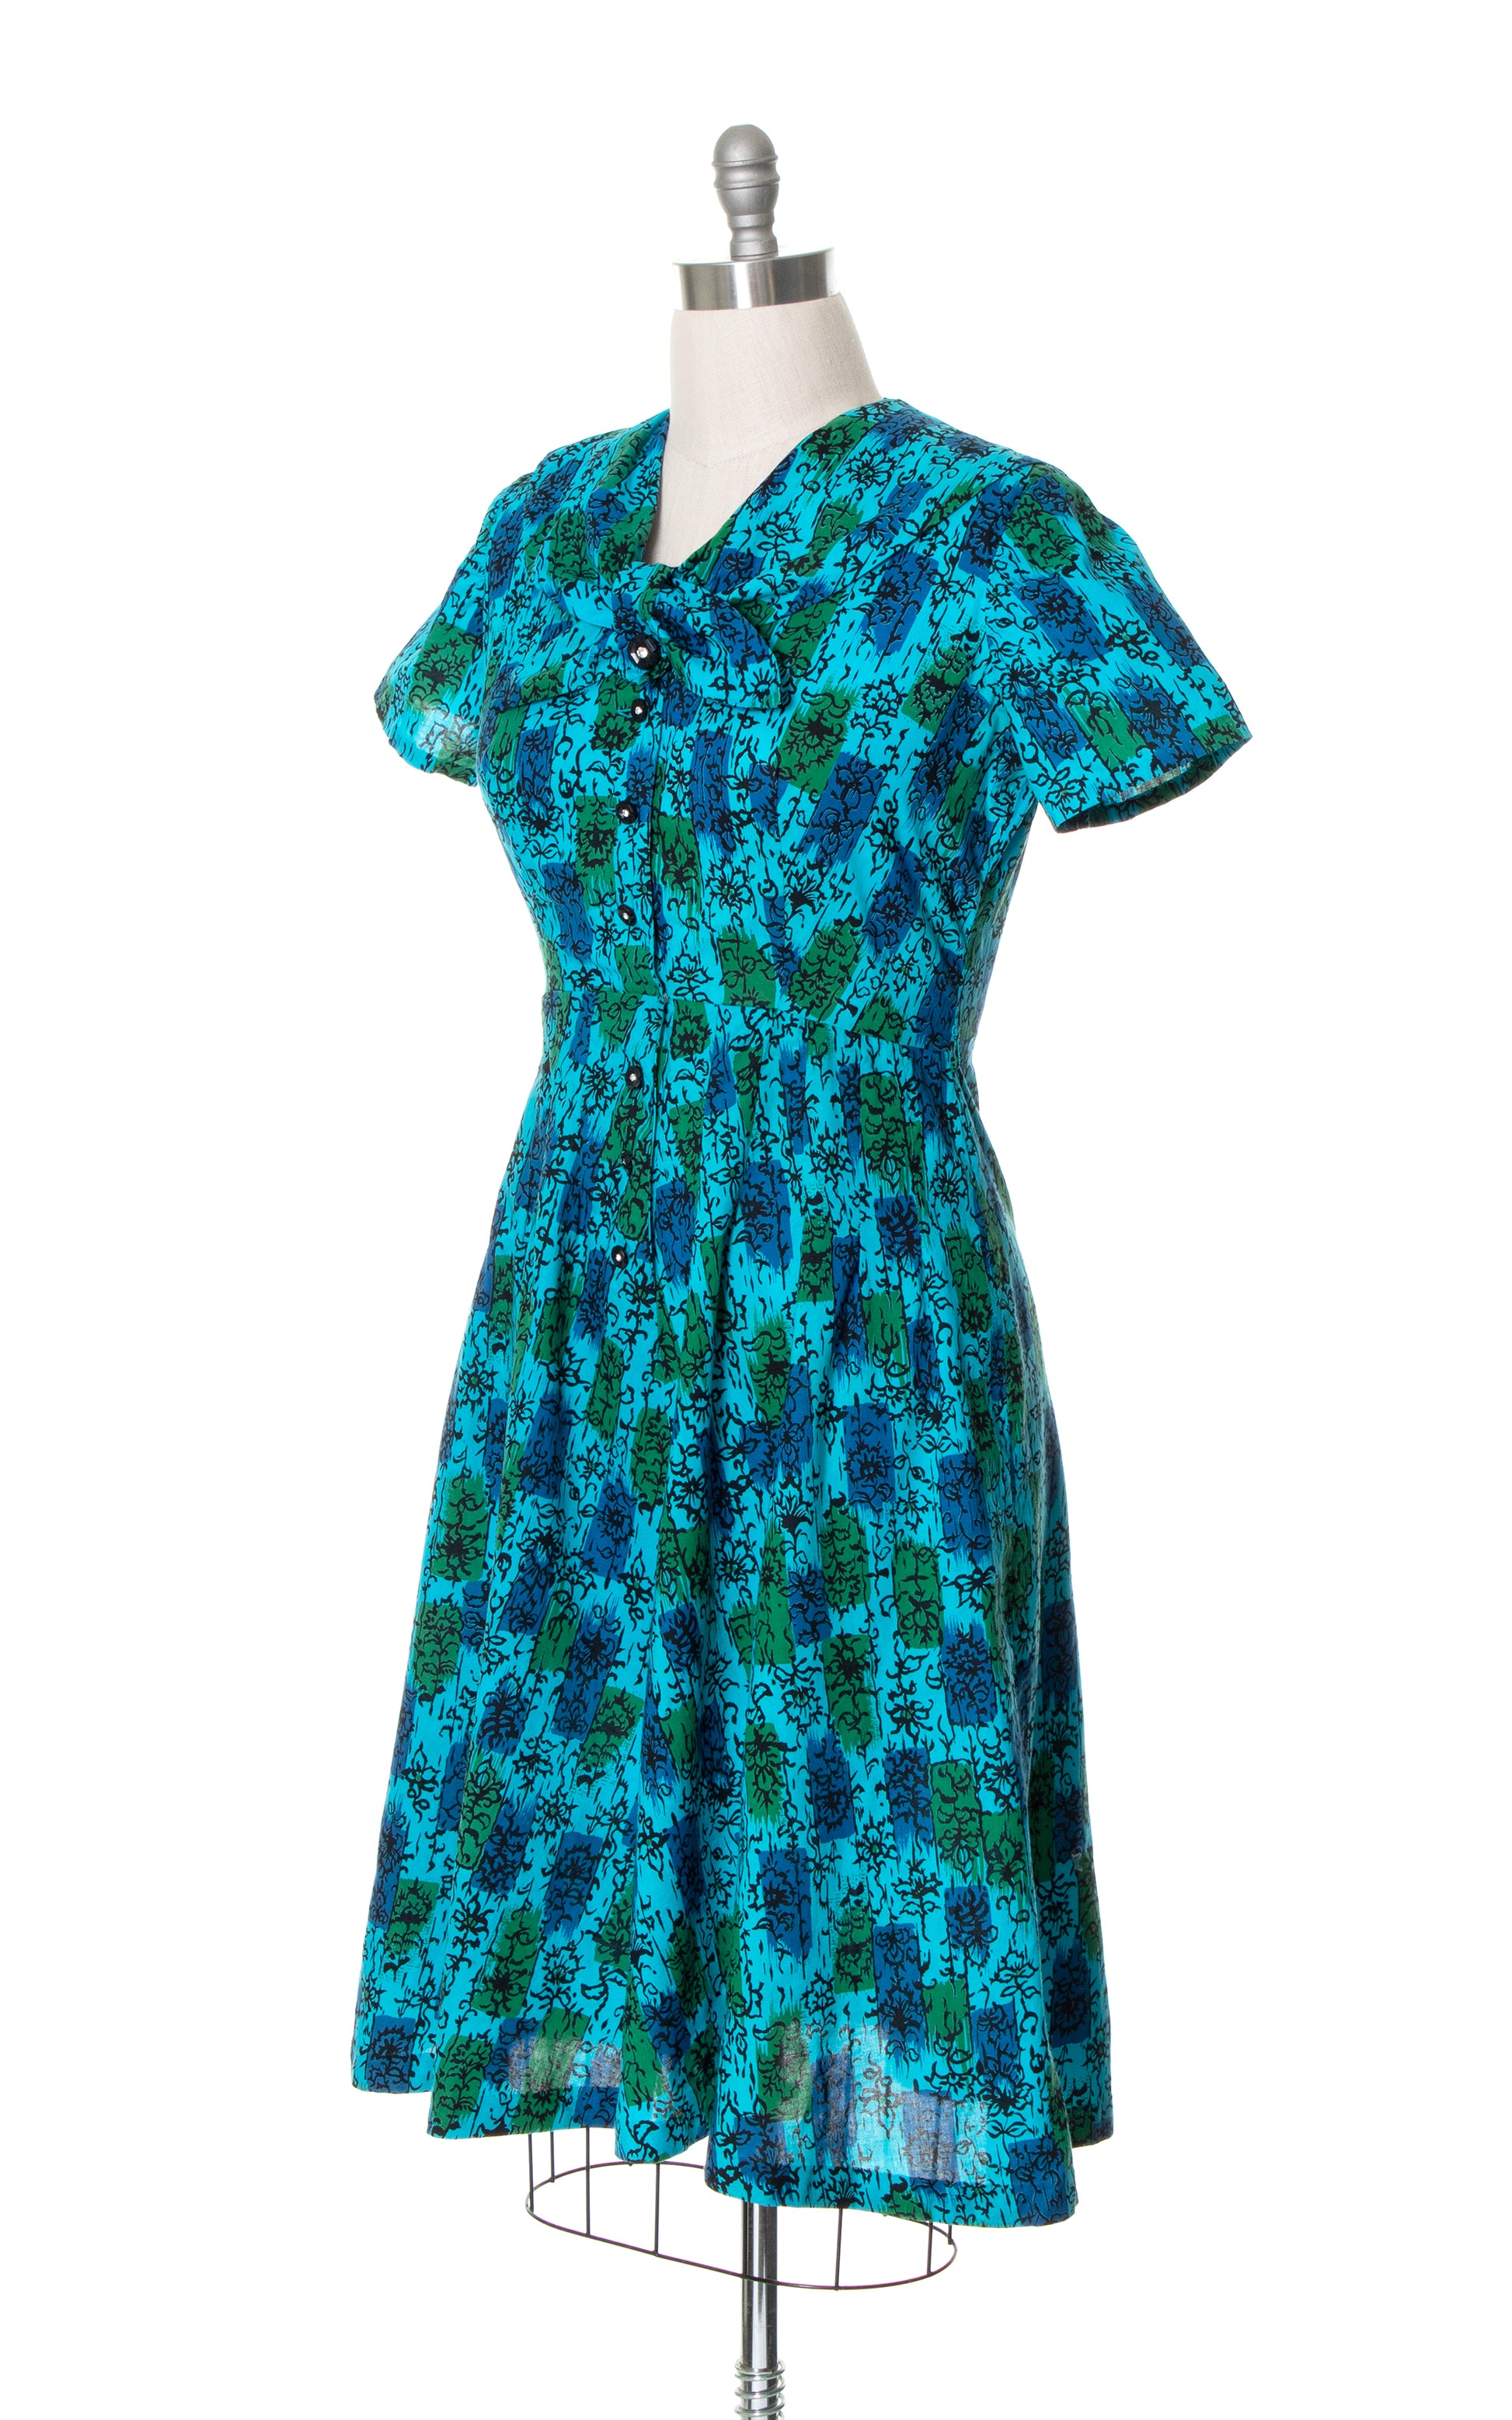 Vintage 60s 1960s Floral Rectangles Cotton Shirtwaist Day Dress Blue Green BirthdayLifeVintage